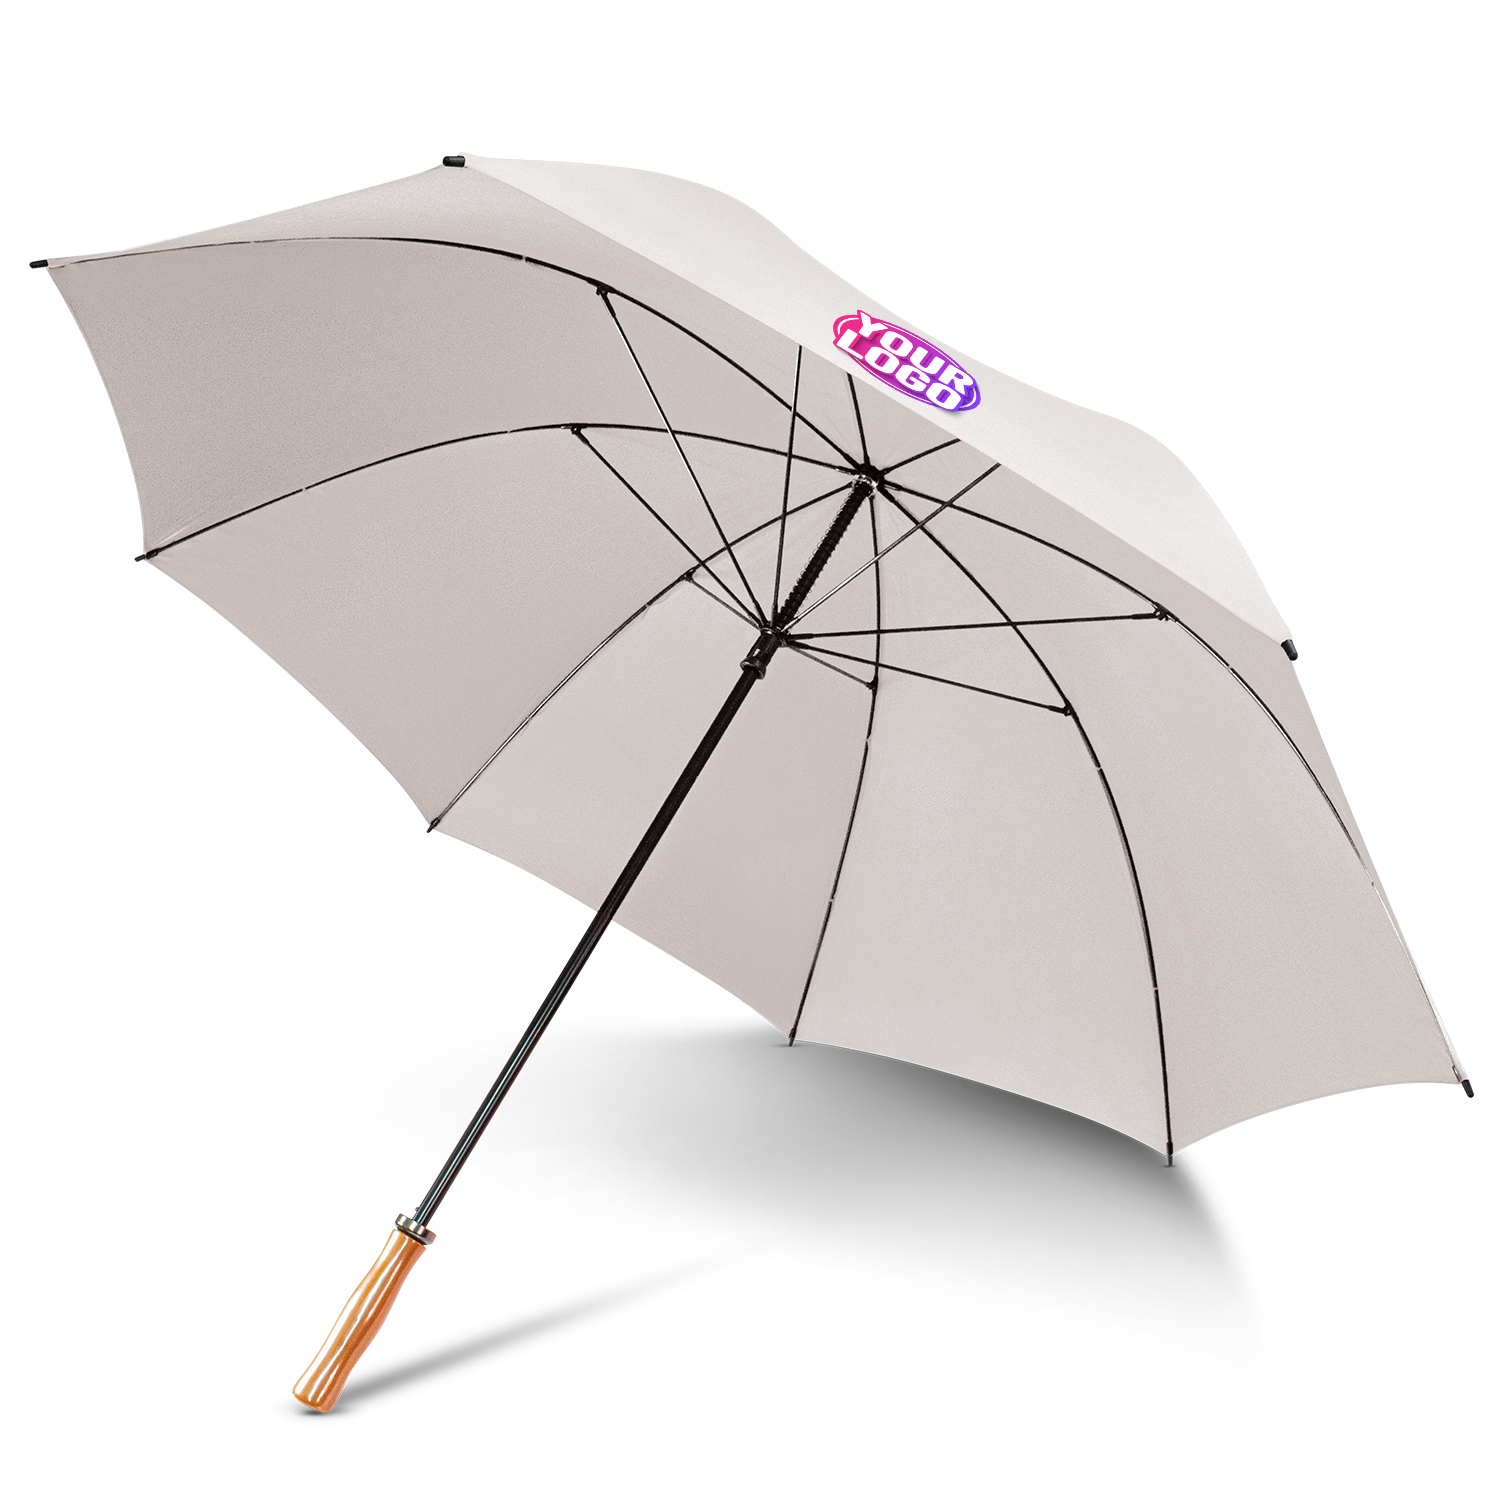 CUSTOM BRANDED - PEROS RainBrella PRO®️ Sports Umbrella with Windproof Fibreglass Frame, Black Electroplated Shaft - Classic Wooden Hand Grip - Solid Colours